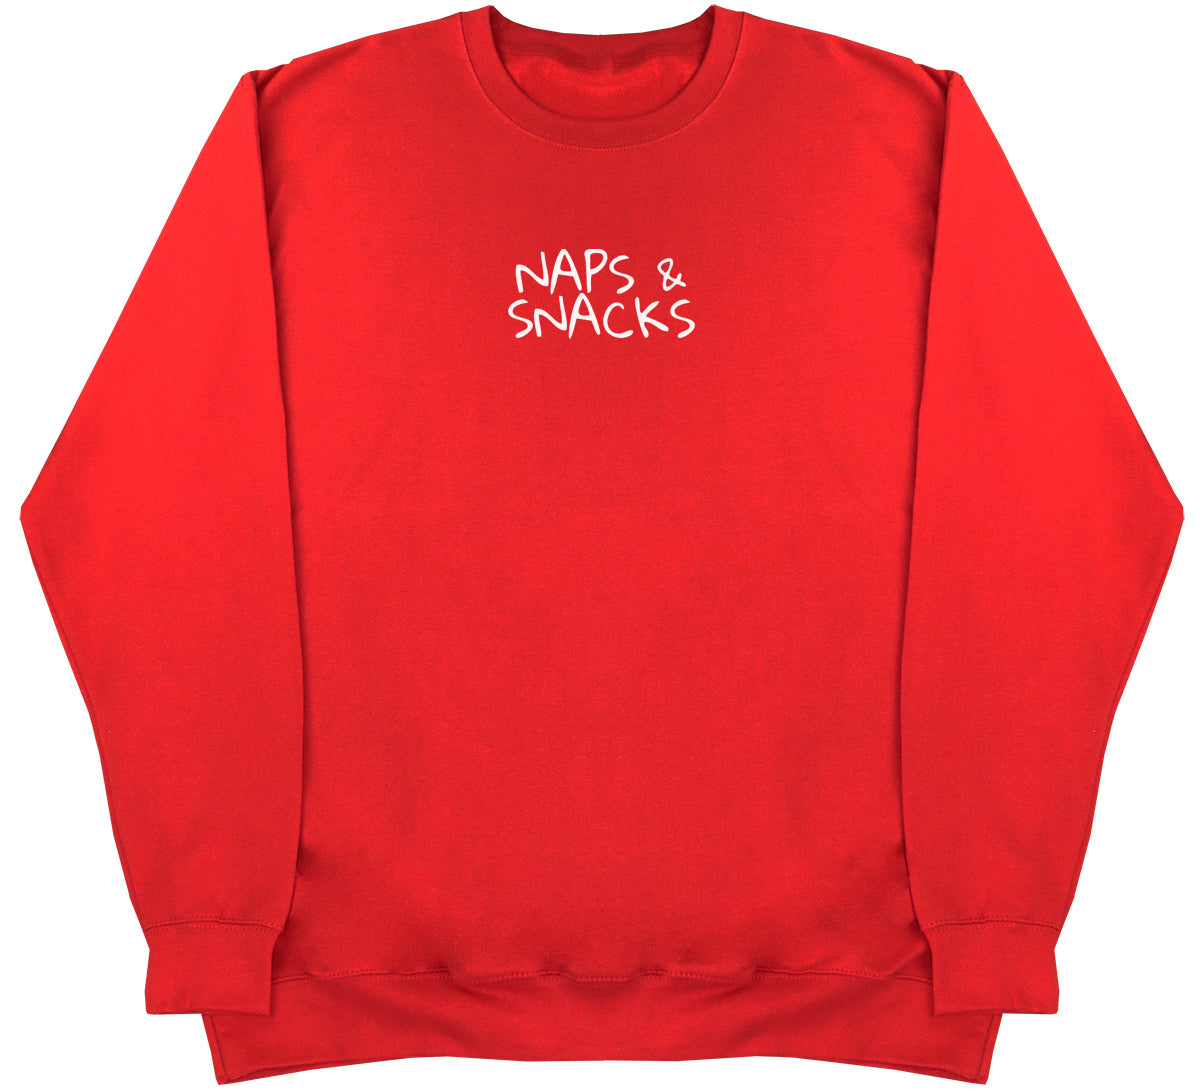 Naps & Snacks - Huge Oversized Comfy Original Sweater